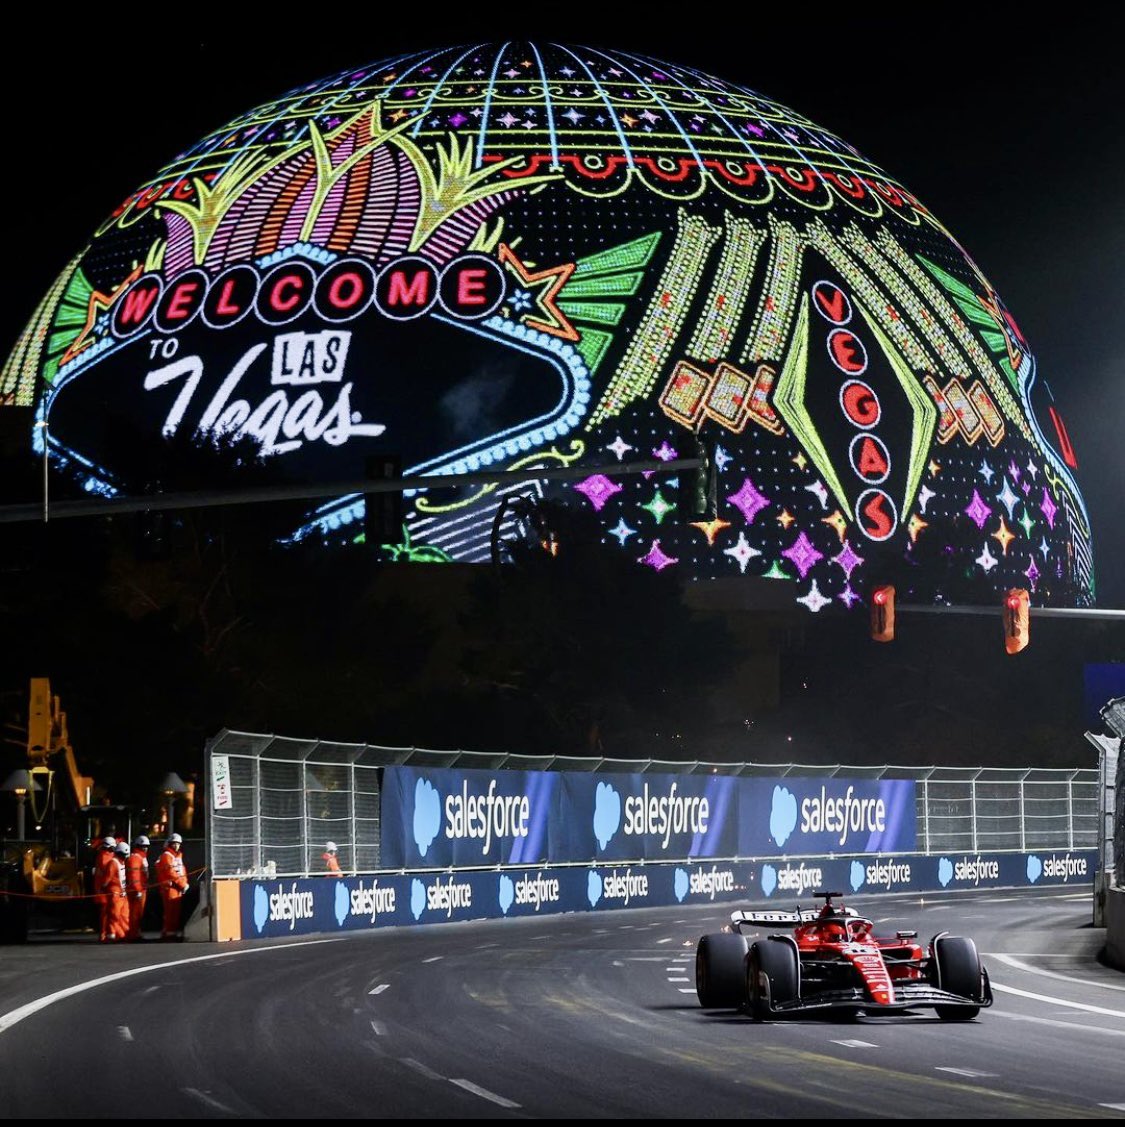 2023 F1 Las Vegas GP qualifying results: Leclerc takes pole